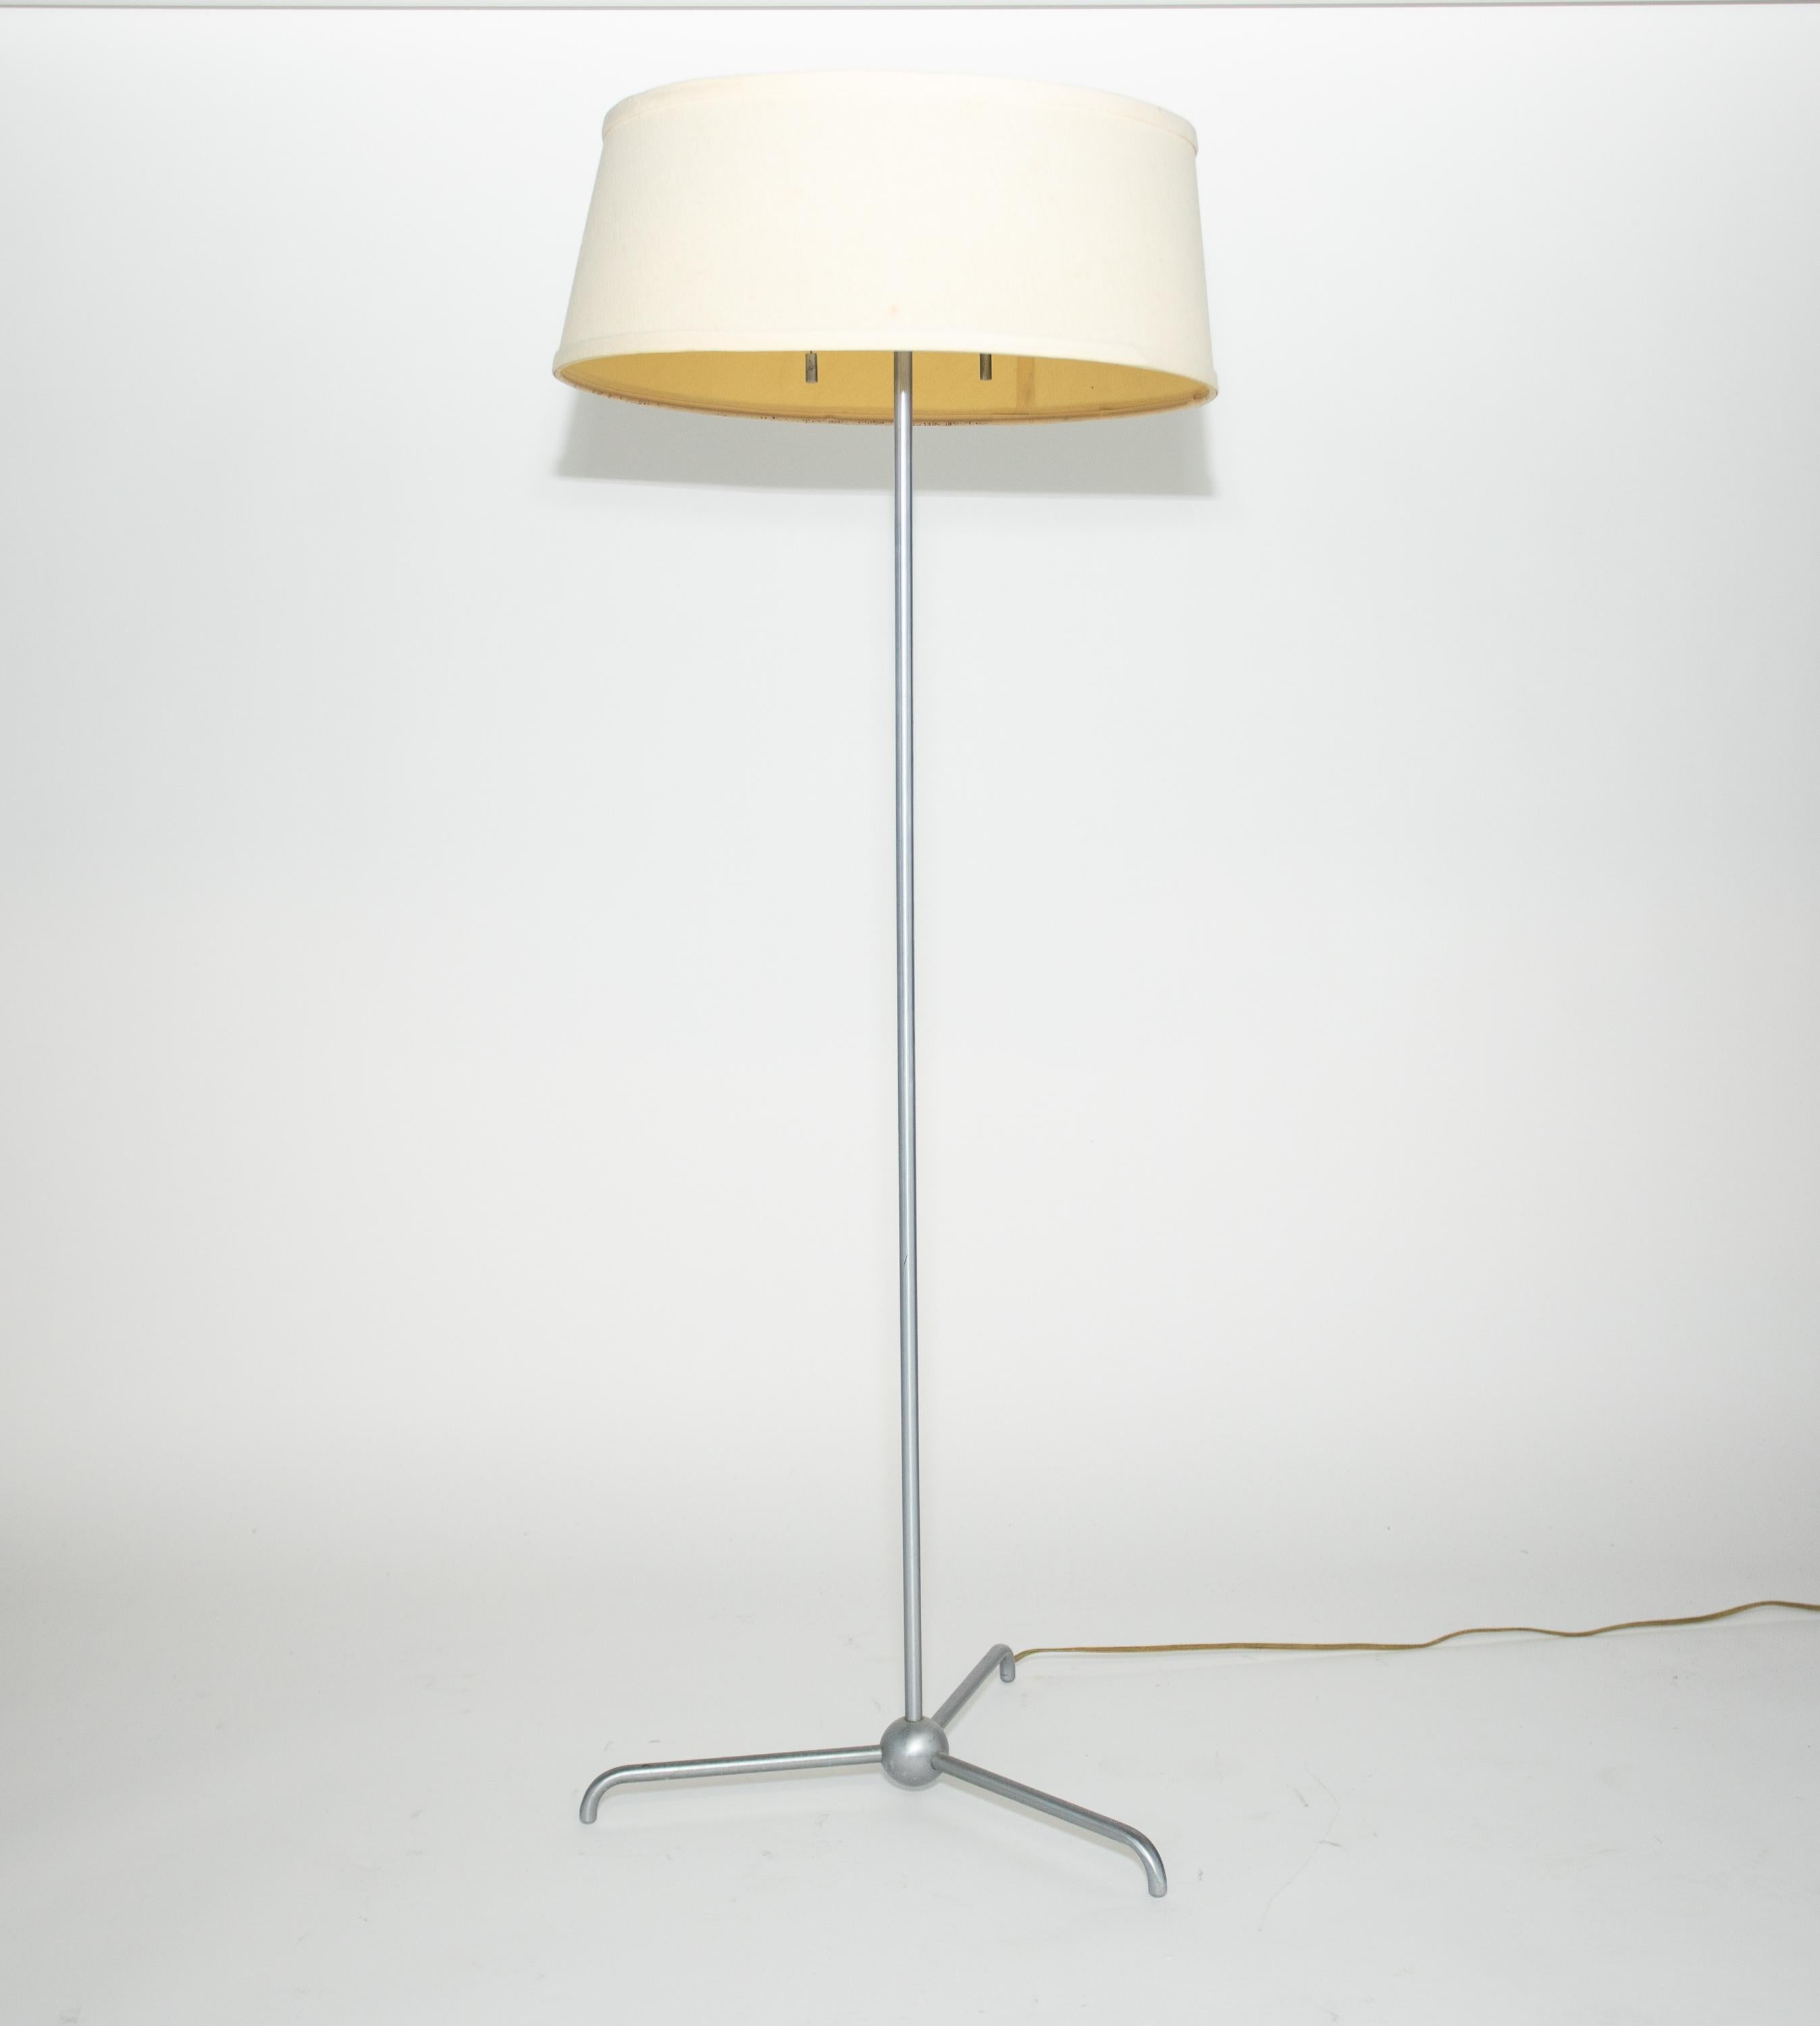 TH RobsJohn Gibbings Tripod Floor Lamp.
Manufactured by Hansen 
Original surface to metal
Diffuser marked Hansen
